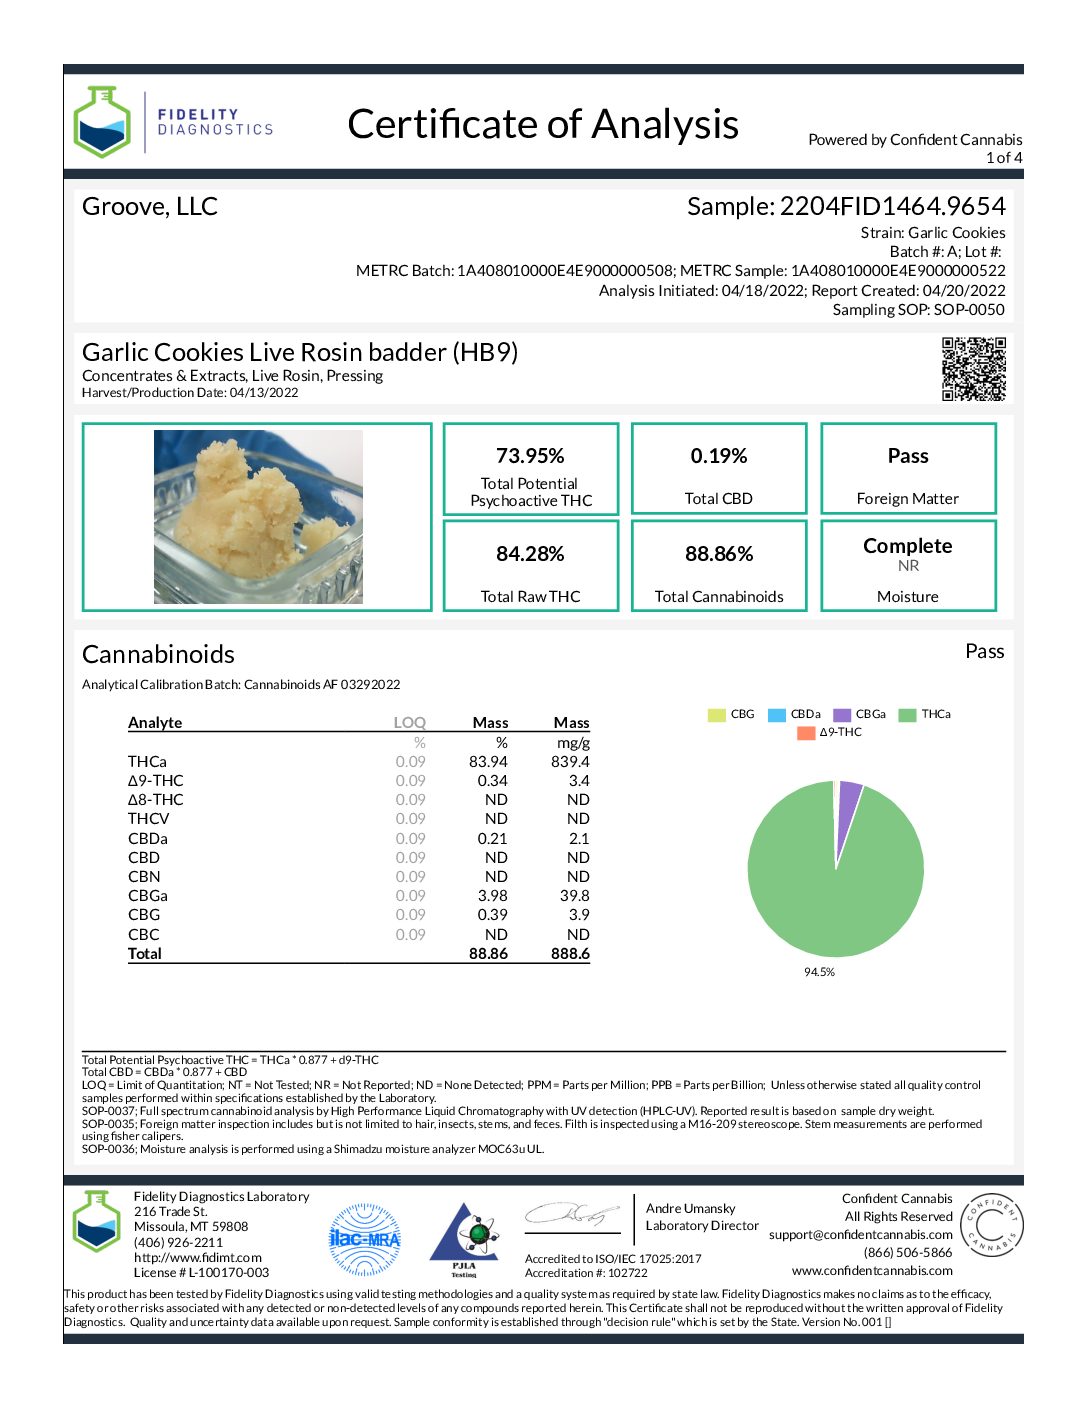 https://groovesolventless.com/wp-content/uploads/2022/04/Garlic-Cookies-Live-Rosin-badder-HB9-pdf.jpg